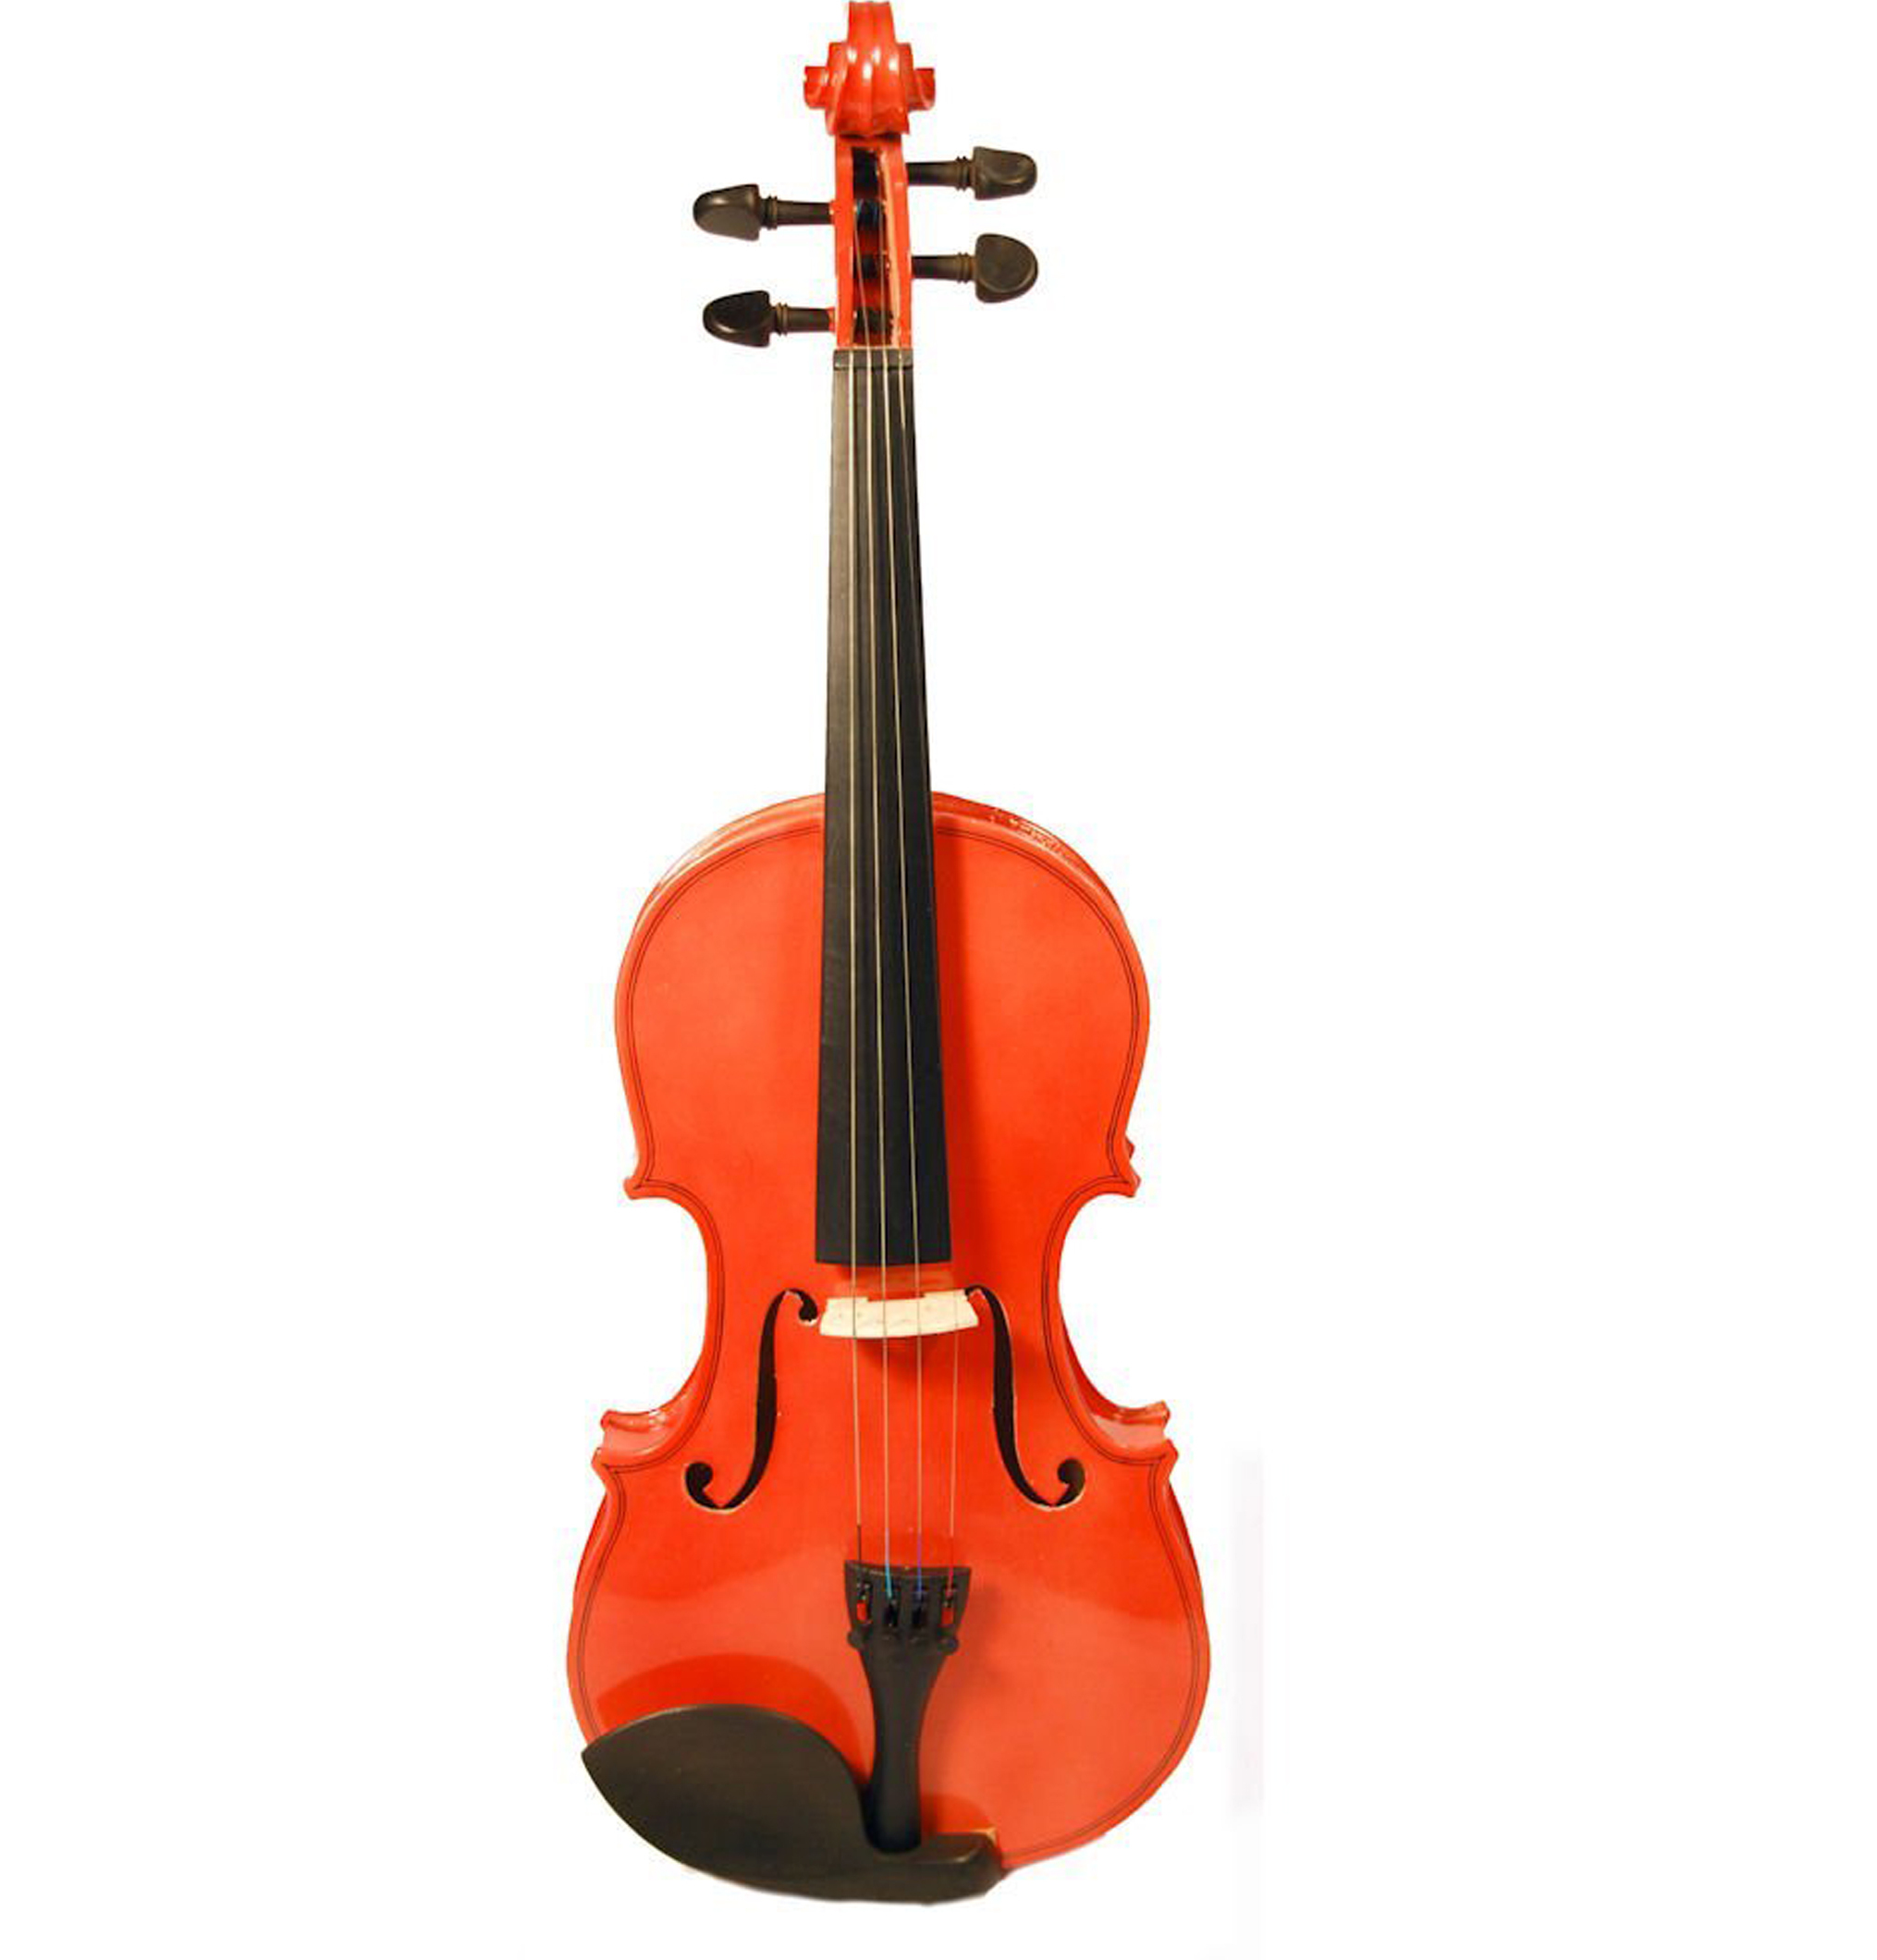 Đàn Violin Kapok MV182 1/2